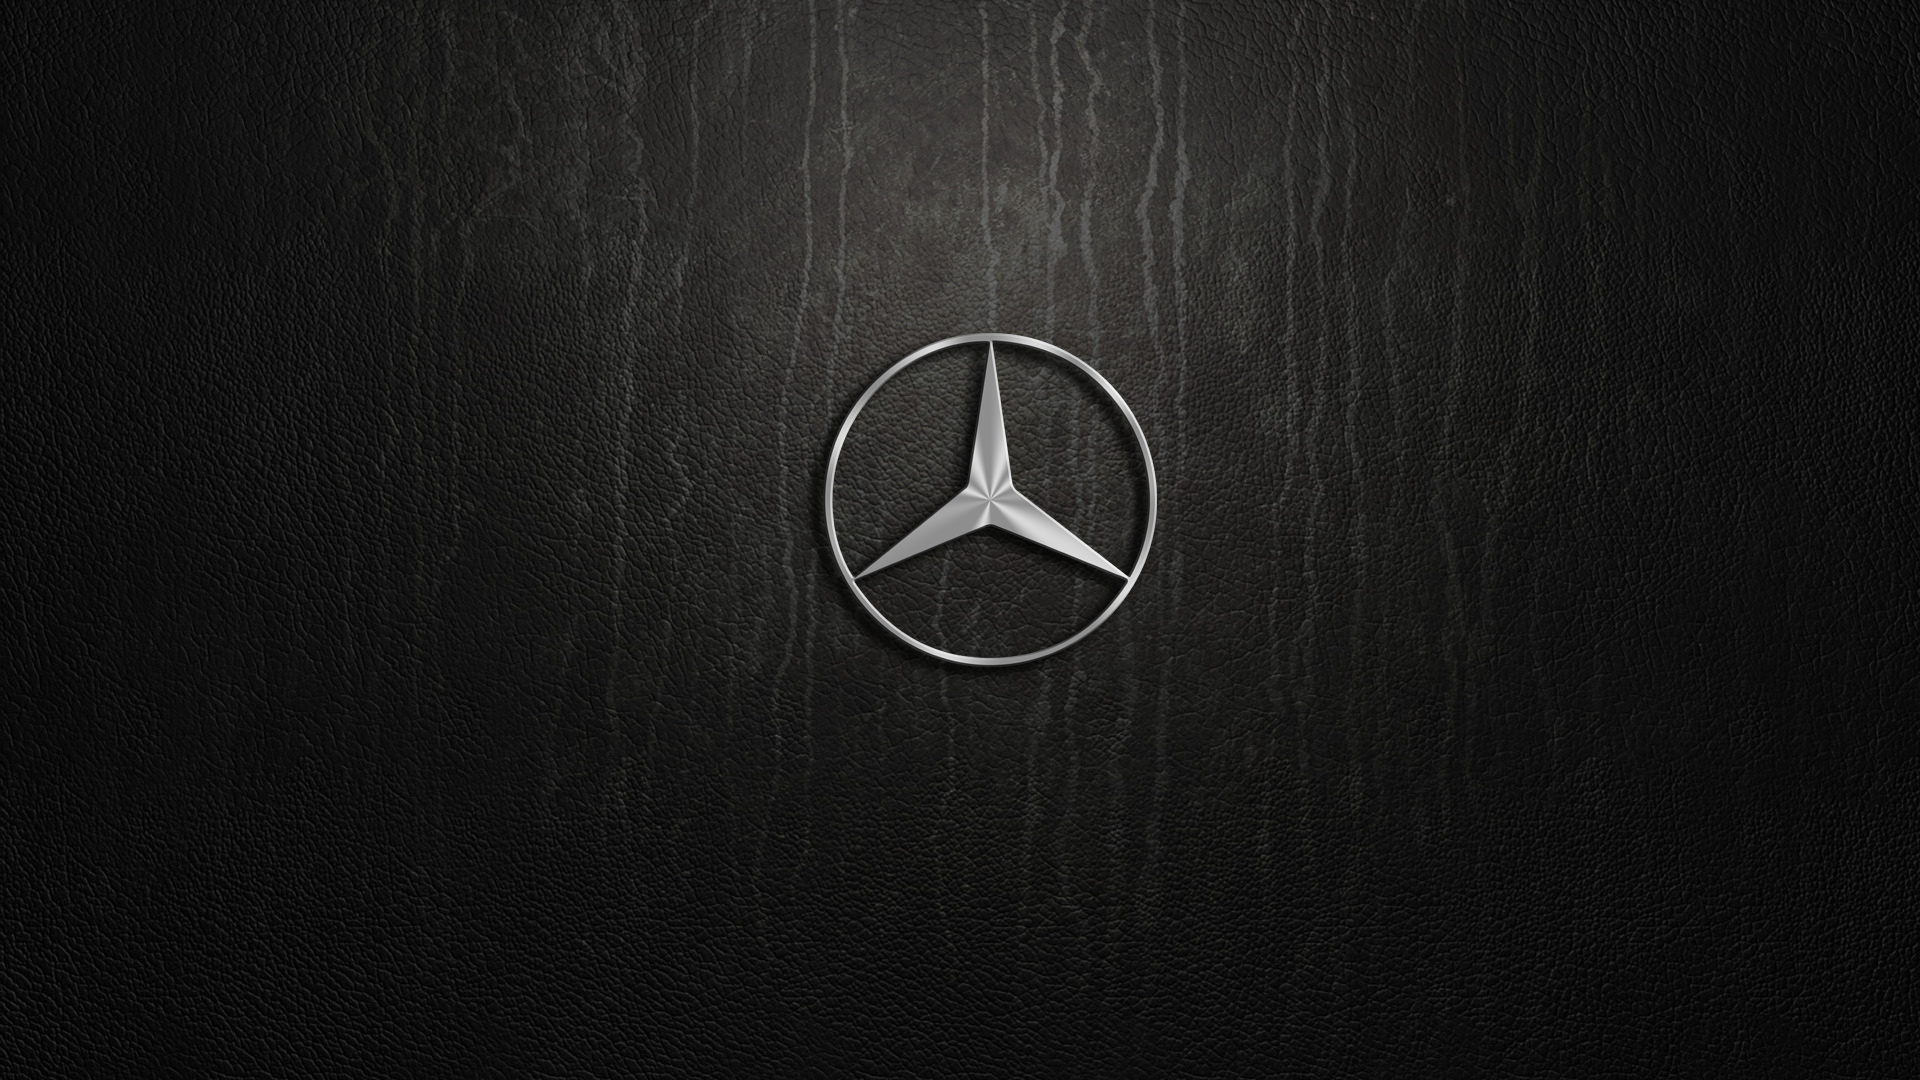 Mercedes-Benz Wallpapers